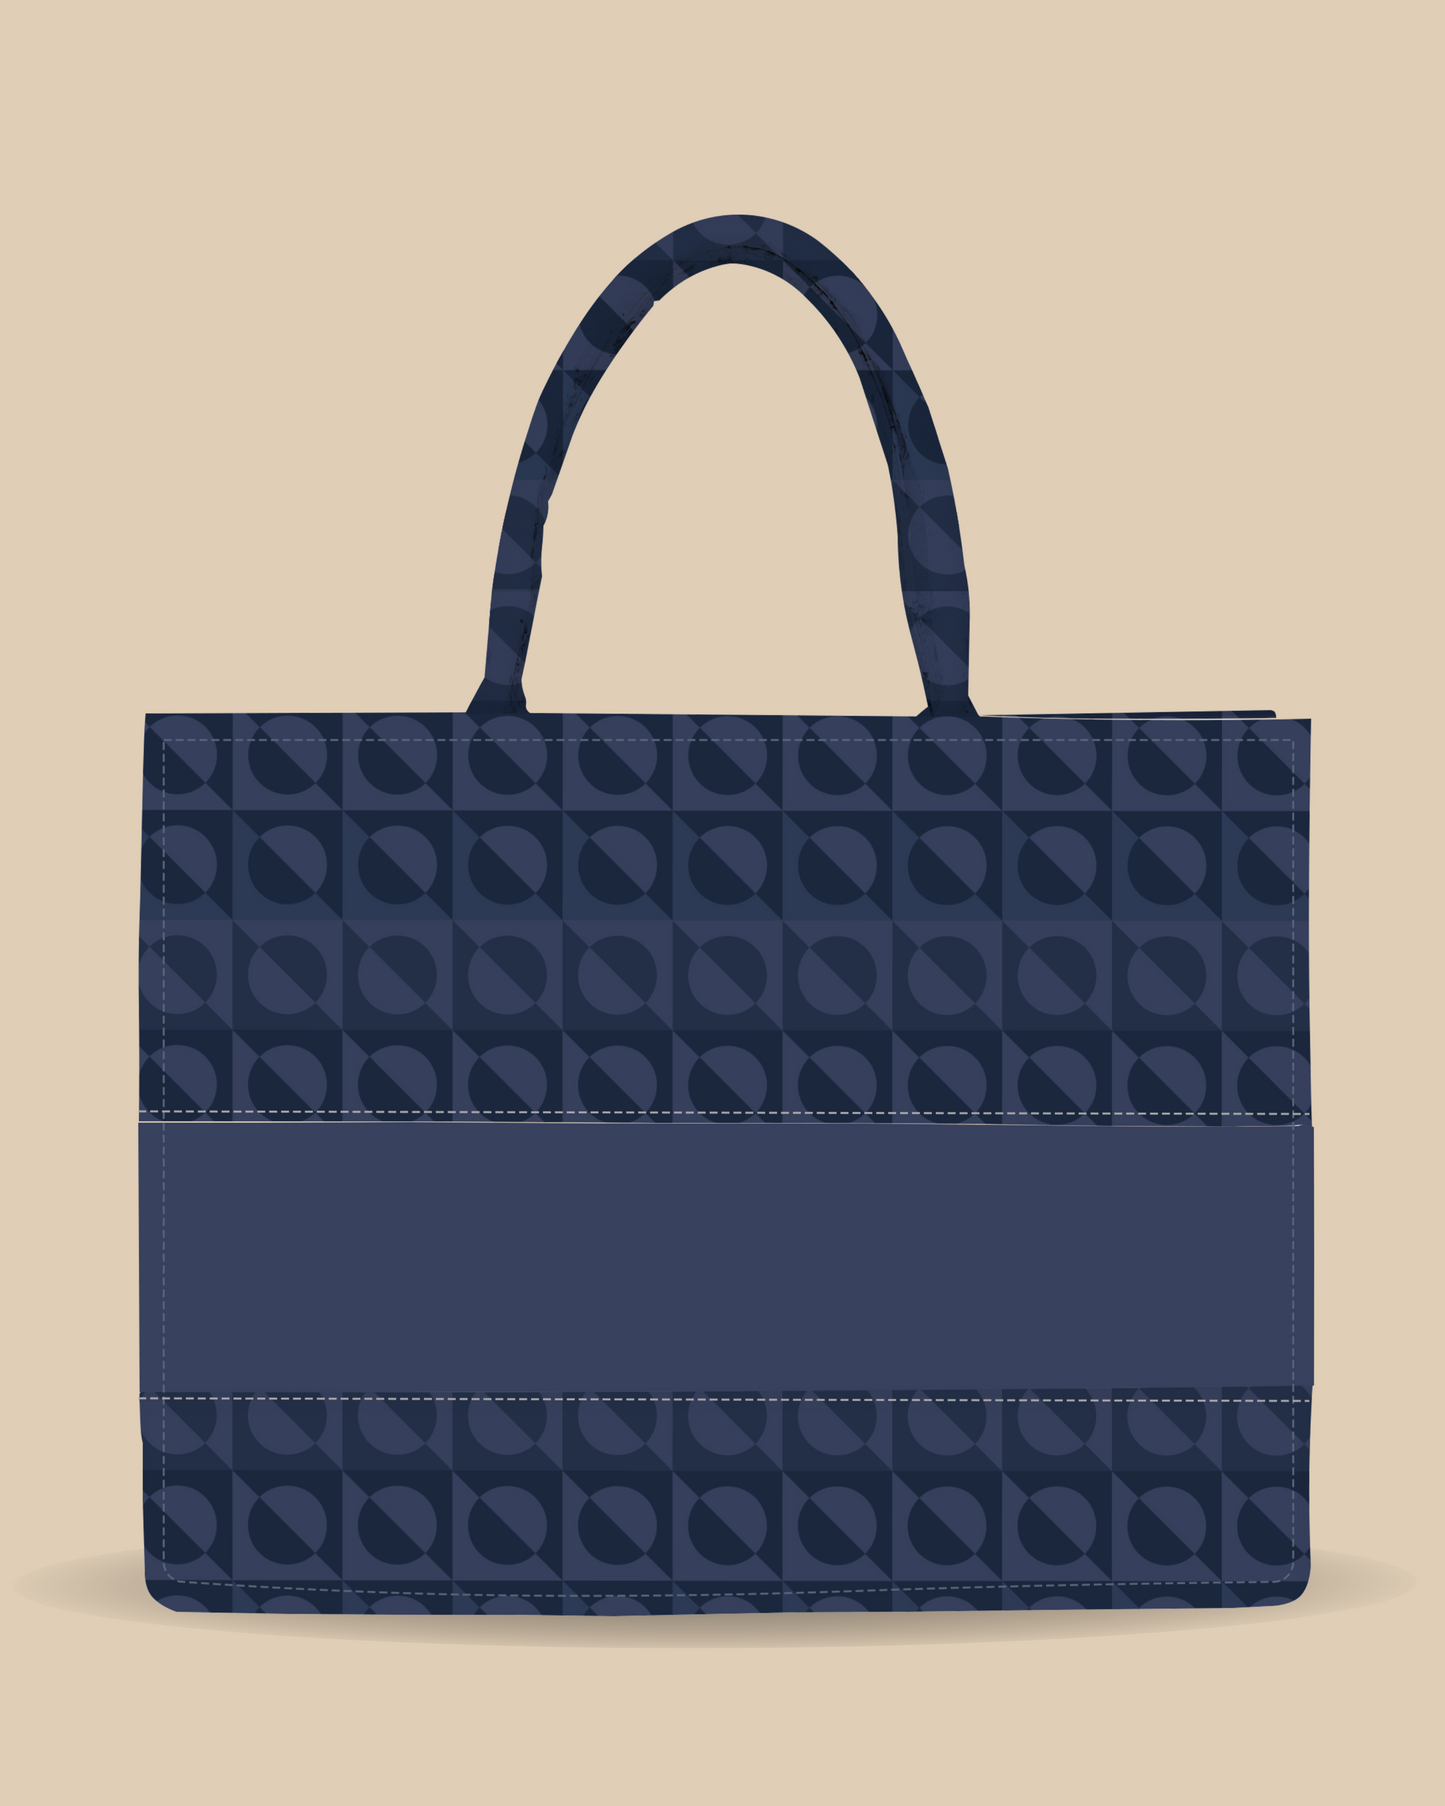 Personalized Tote Bag Designed With Volumatric Island Batik Pattern